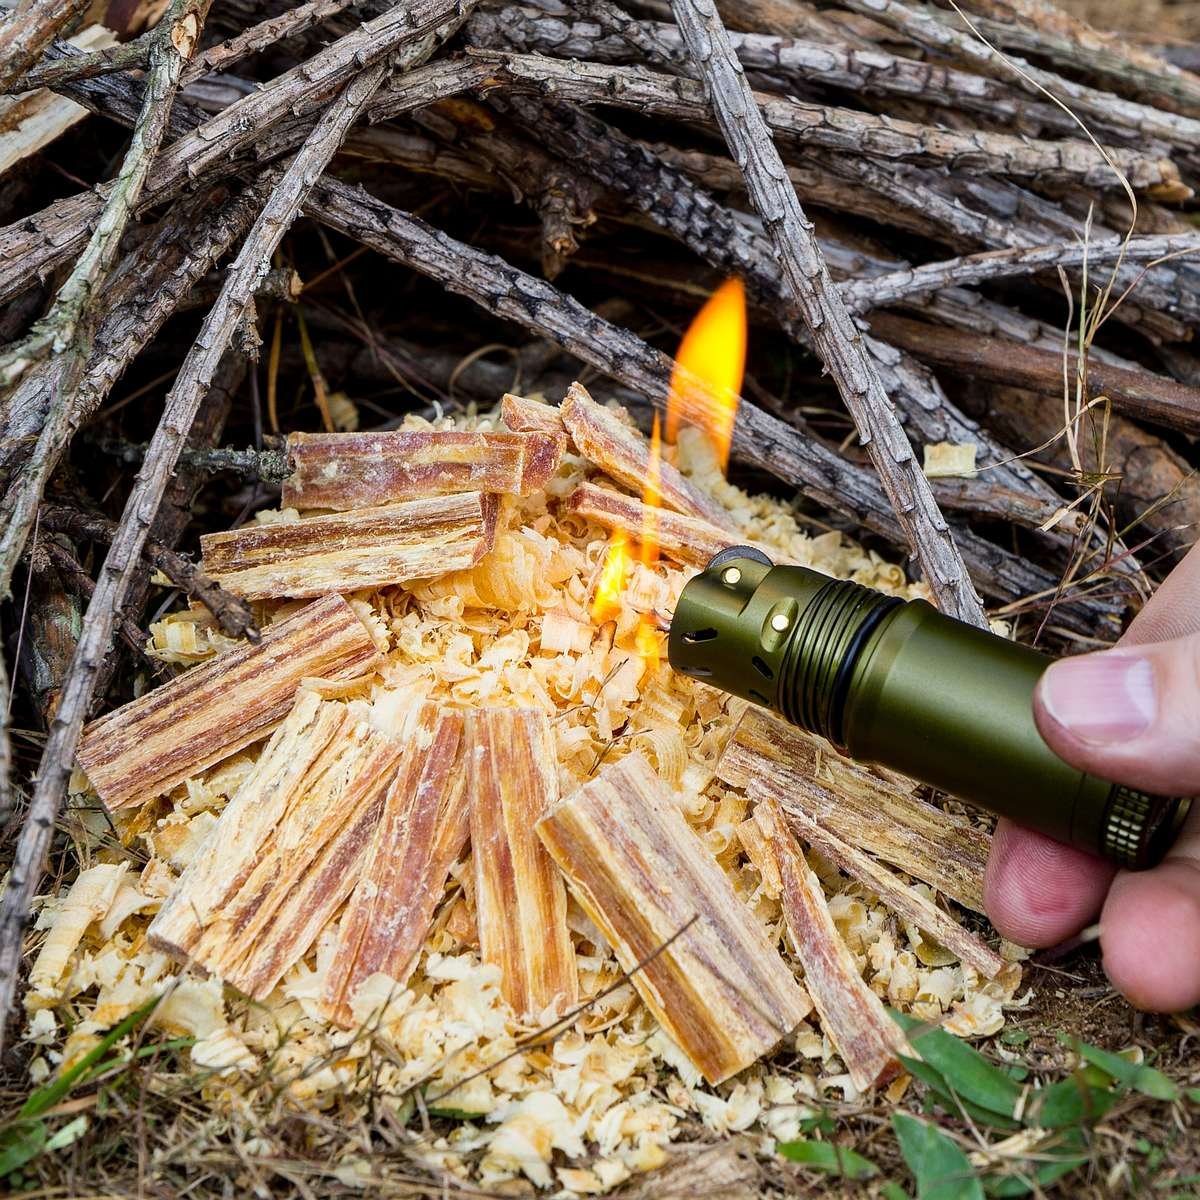 Exotac Firesleeve ruggedizes your Bic lighter